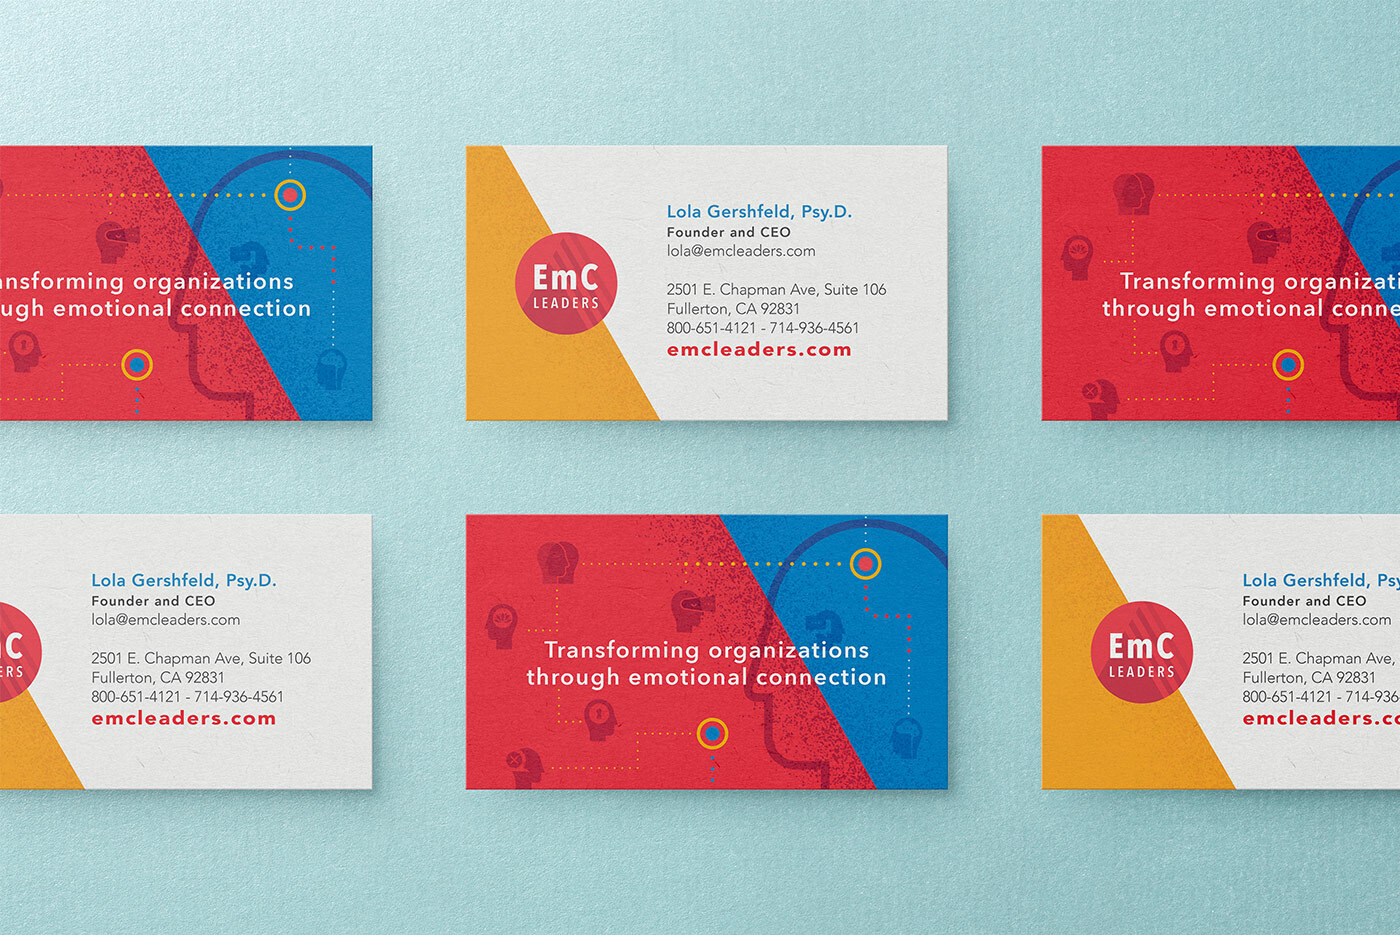 EmC Leaders business cards design